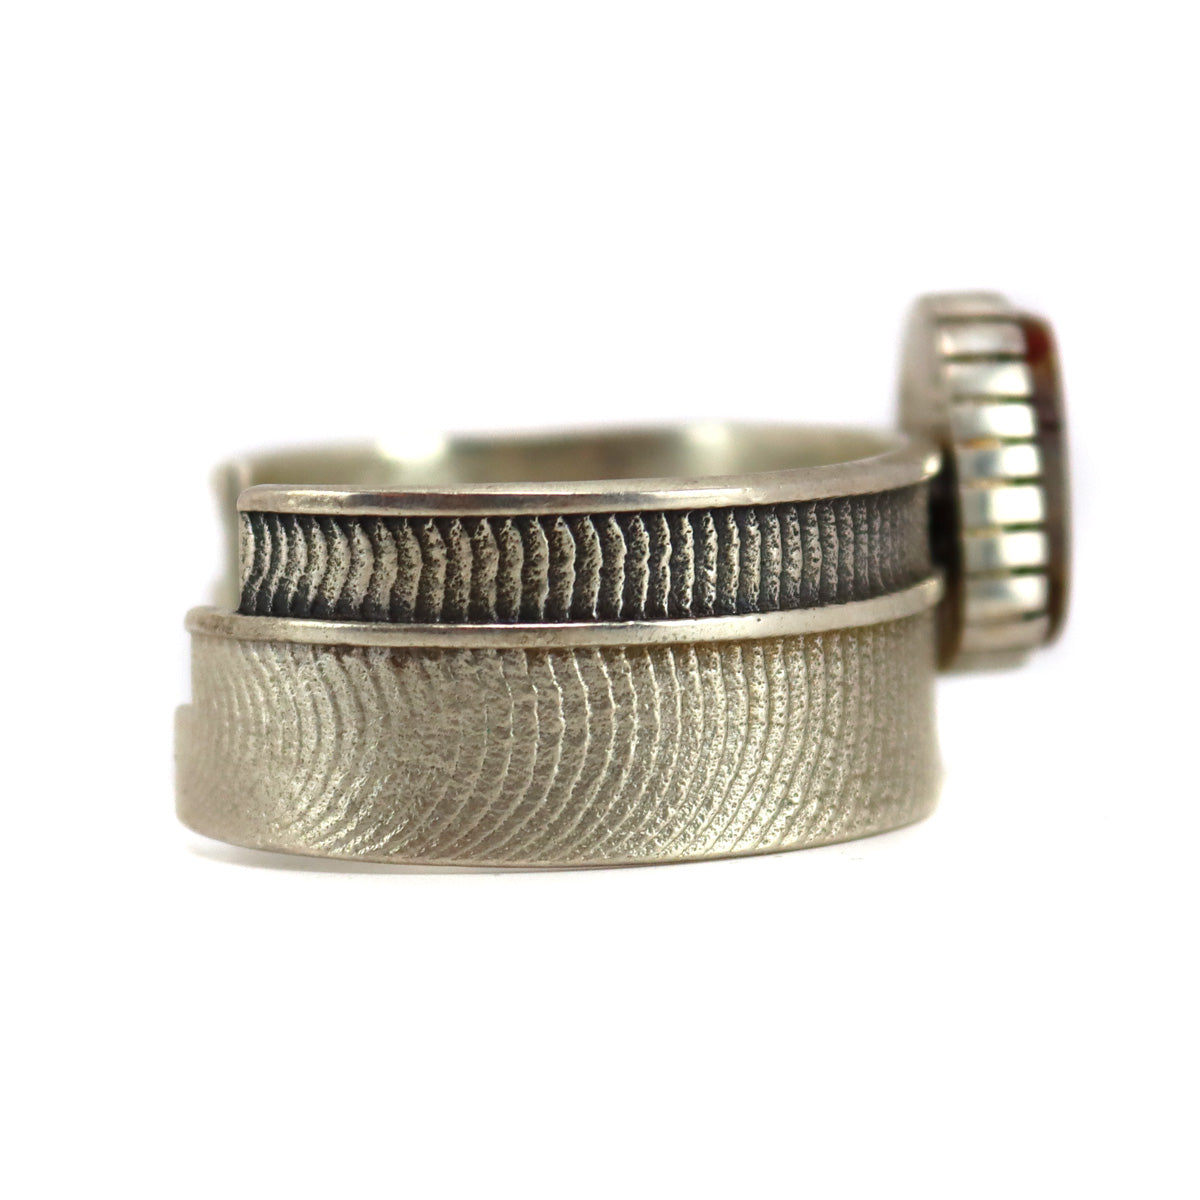 Althea Cajero - Santo Domingo/Acoma - Agate and Silver Tufacast Bracelet c. 2000s, size 5.5 (J16064-021)